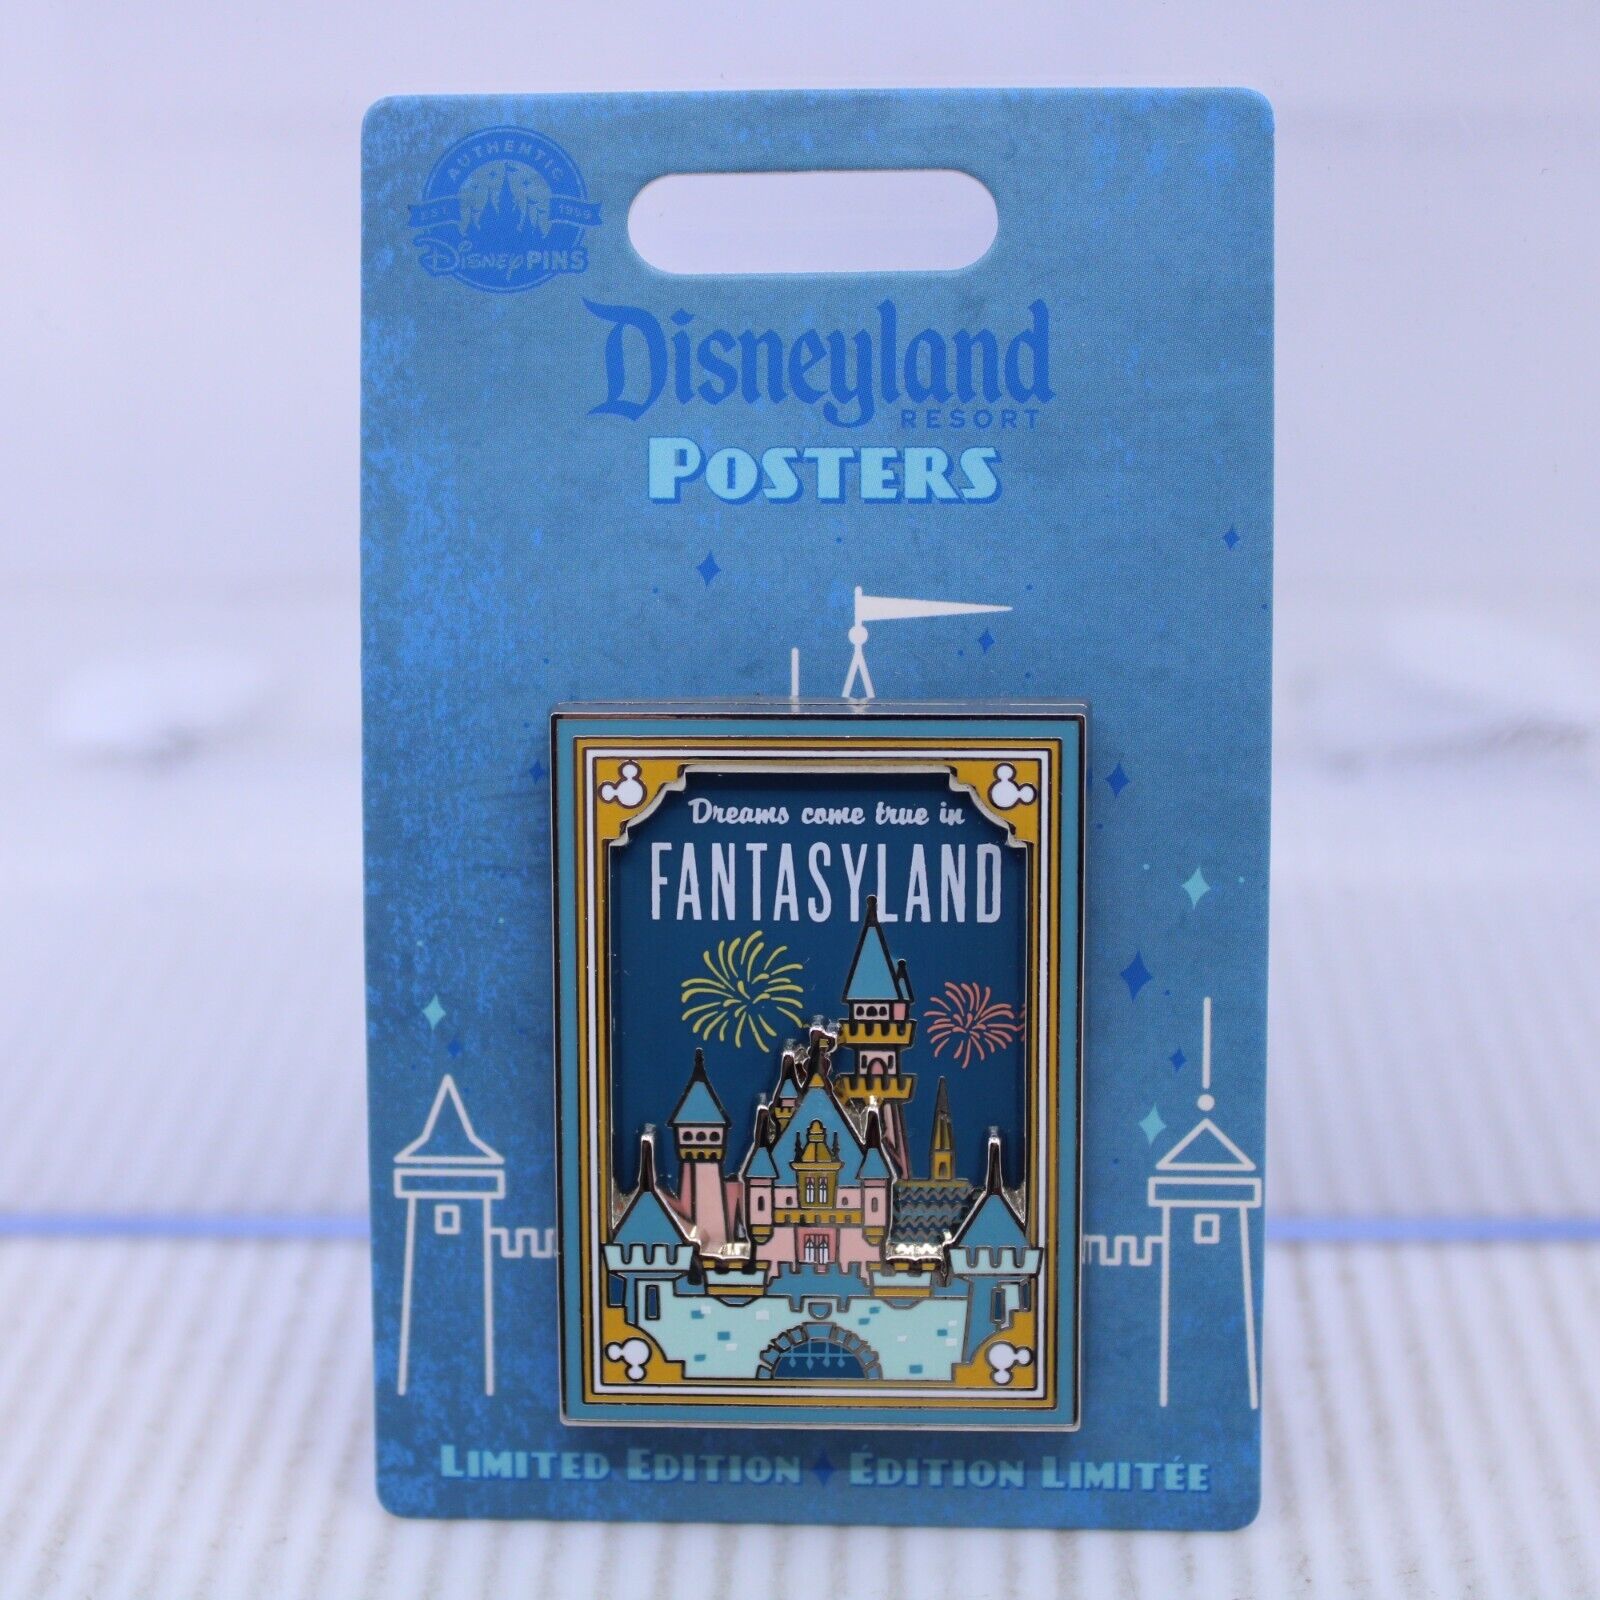 C2 Disney DLR LE Pin Disneyland Poster Posters Fantasyland Castle